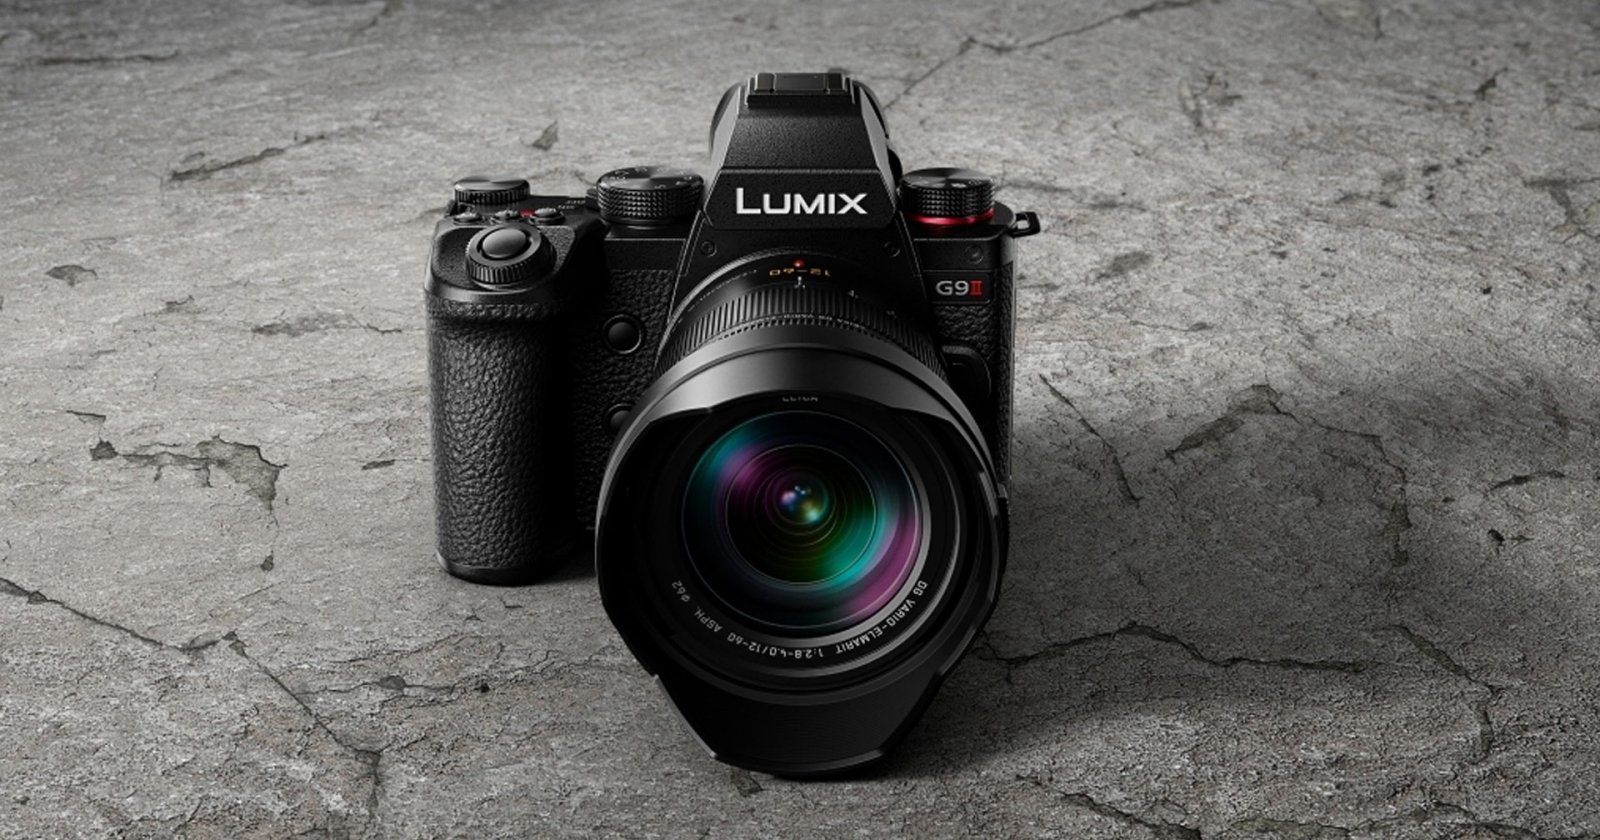 Panasonic ปล่อยเฟิร์มแวร์ให้เลนส์ Lumix MFT ถึง 6 รุ่น รองรับกล้อง G9 II แล้ว!